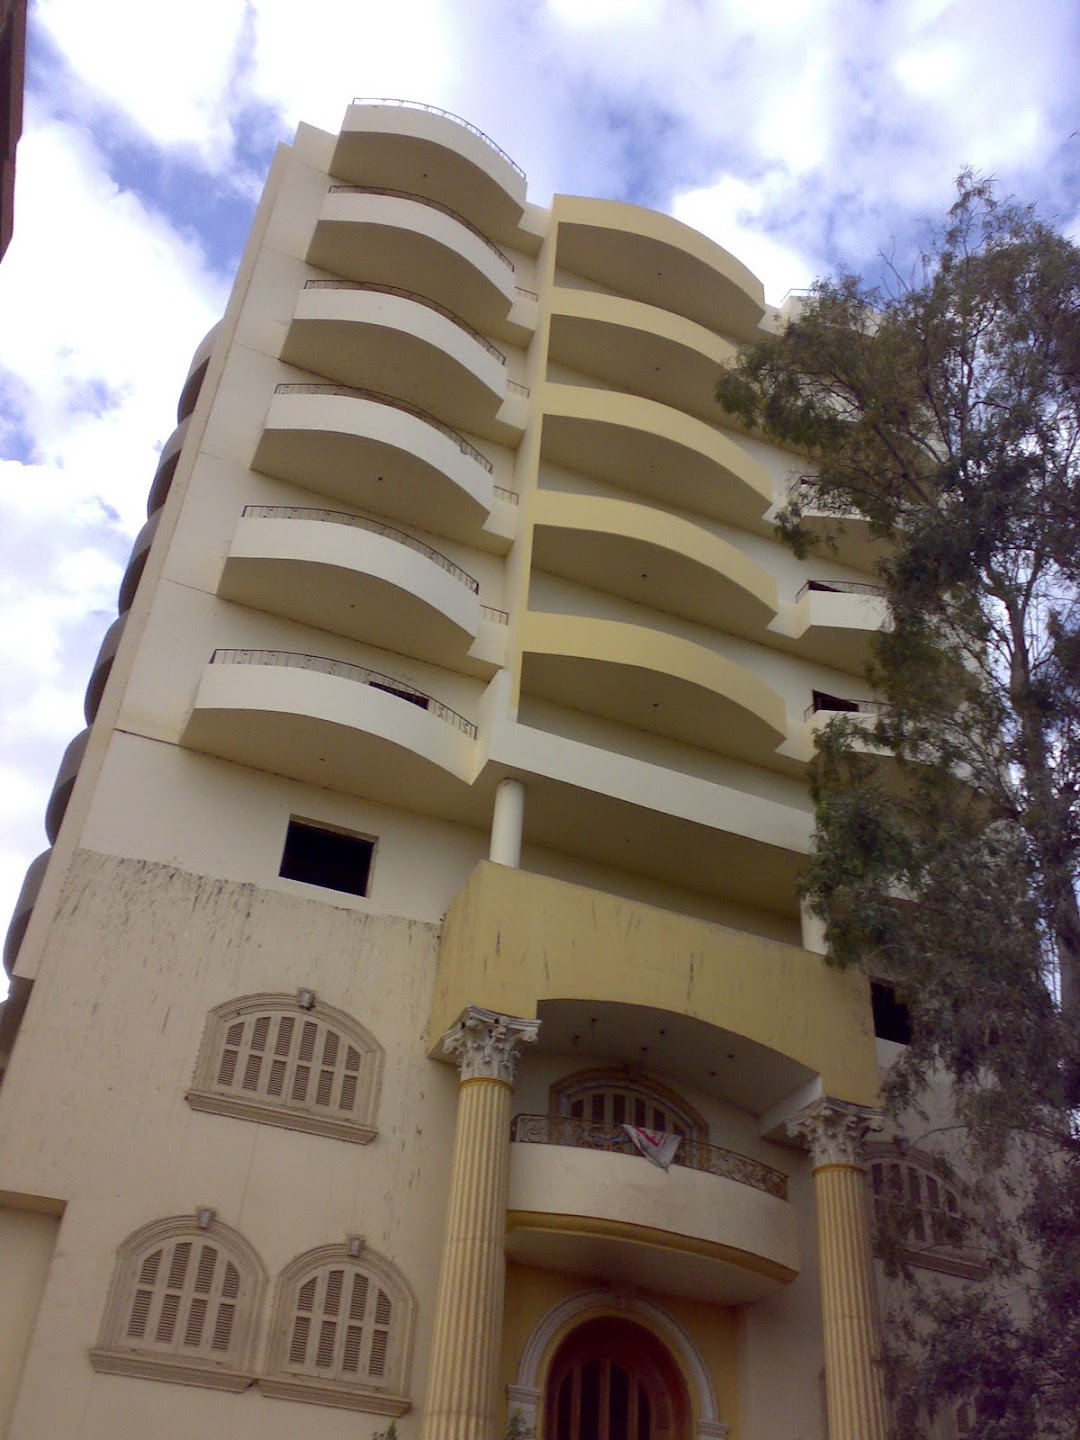 Residential Tower d unique